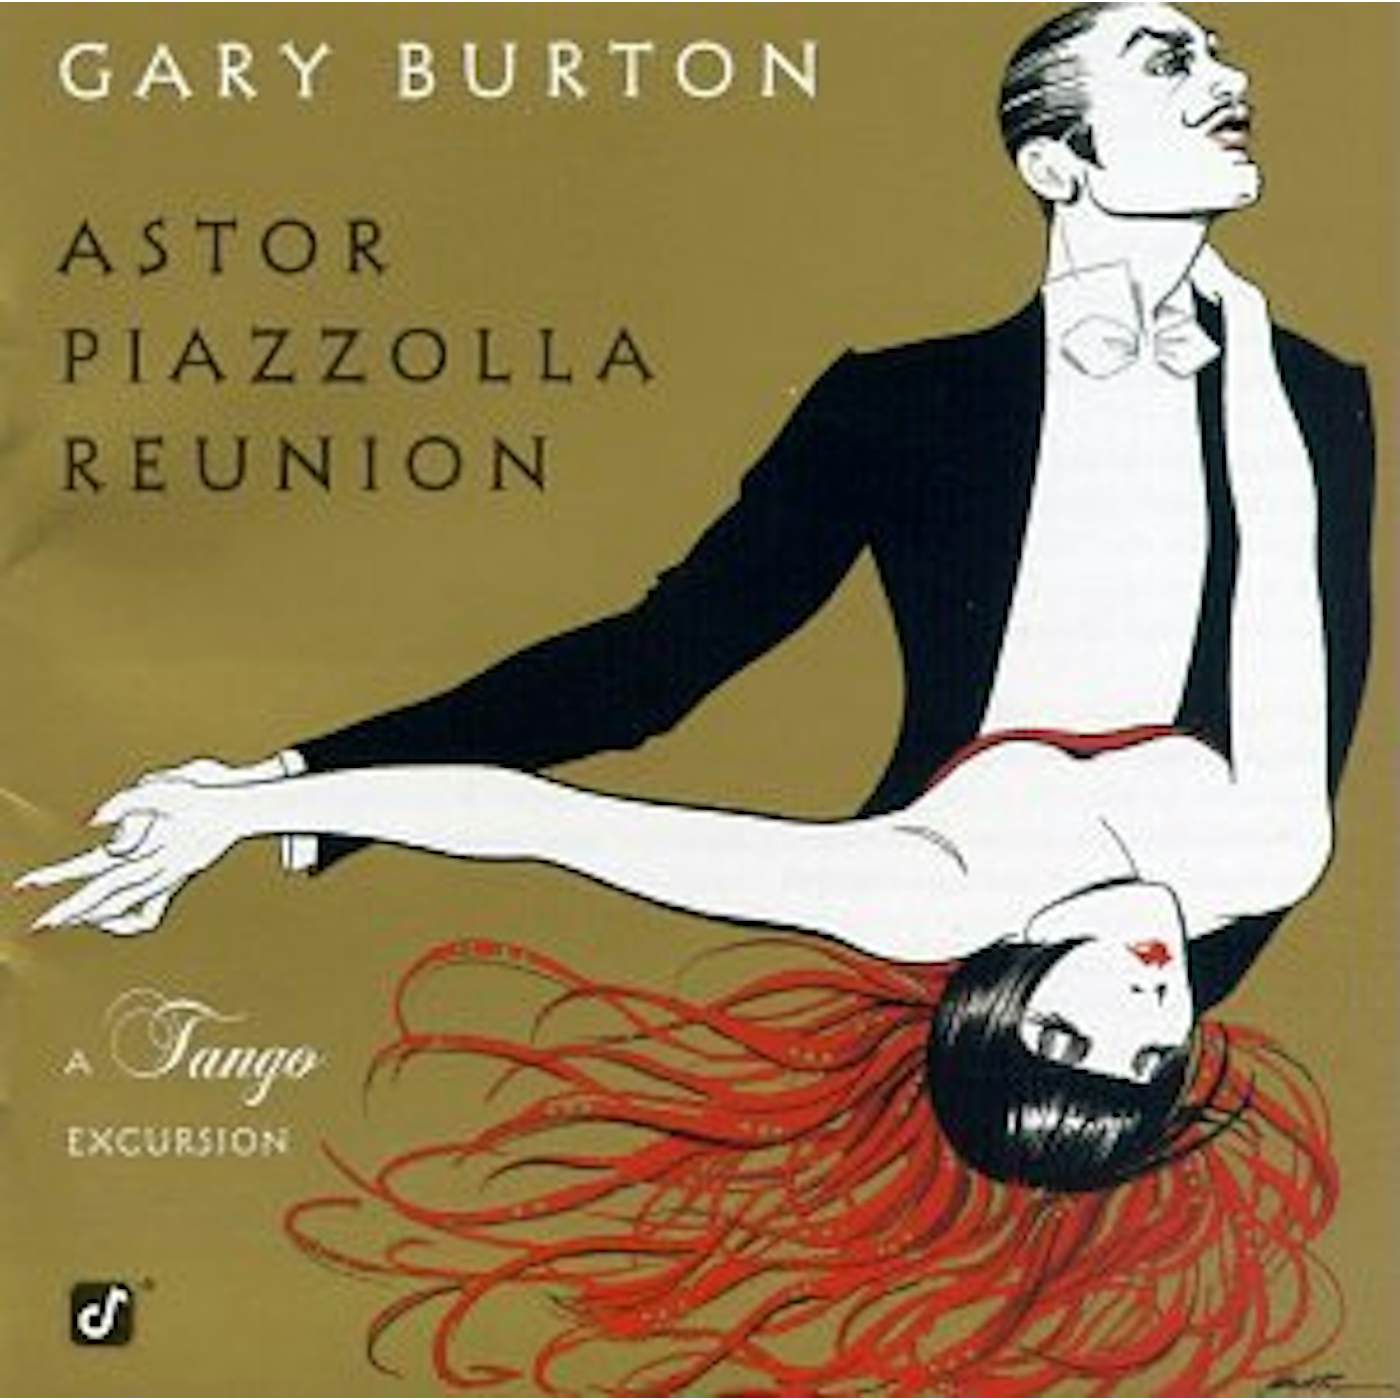 Gary Burton ASTOR PIAZZOLLA REUNION - TANGO EXCURSION CD